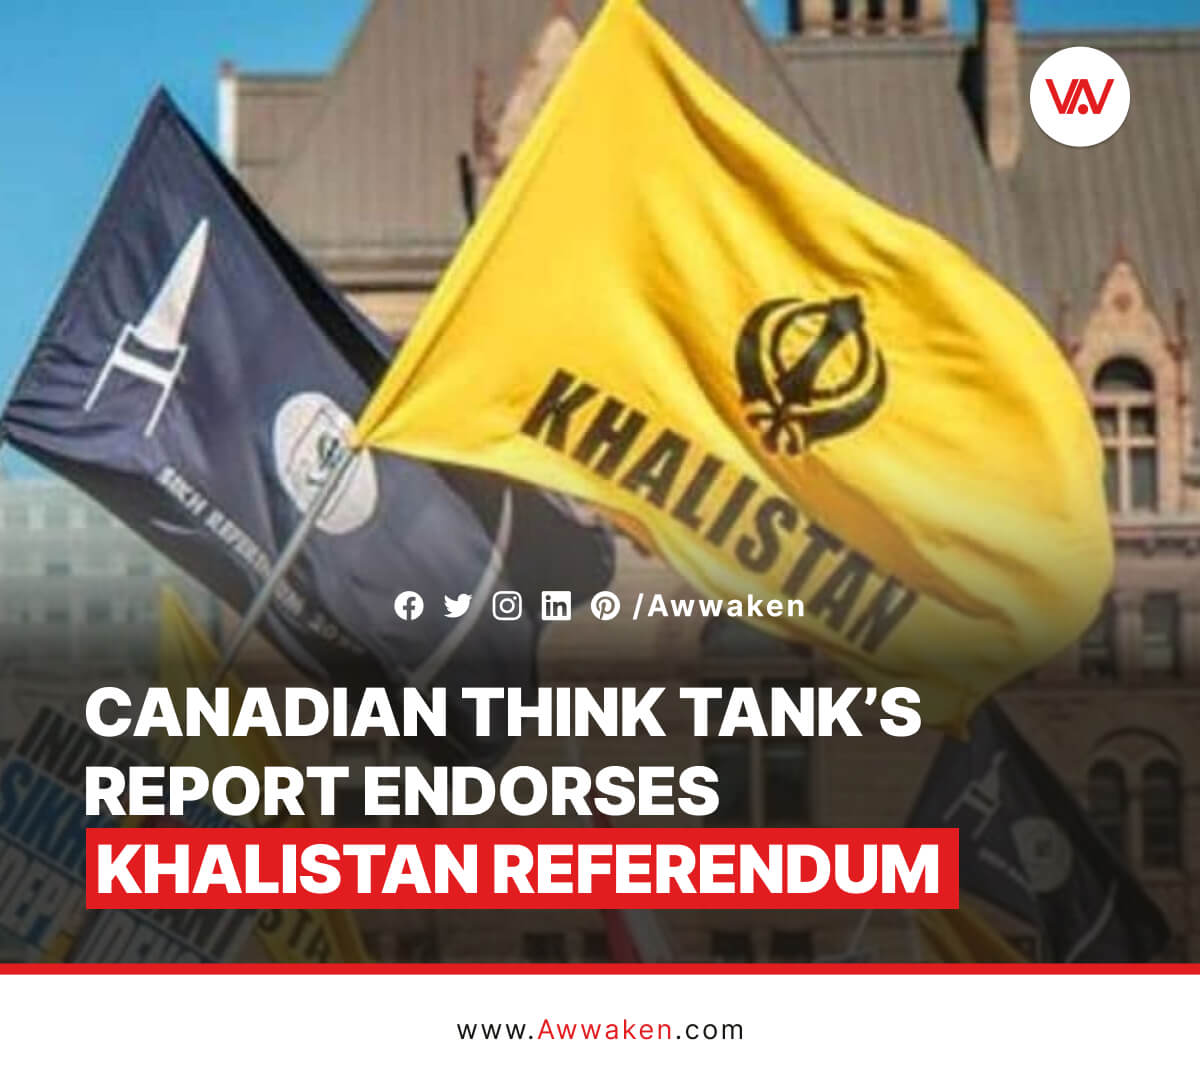 Khalistan Referendum endorsed by Canadian think tank_awwaken